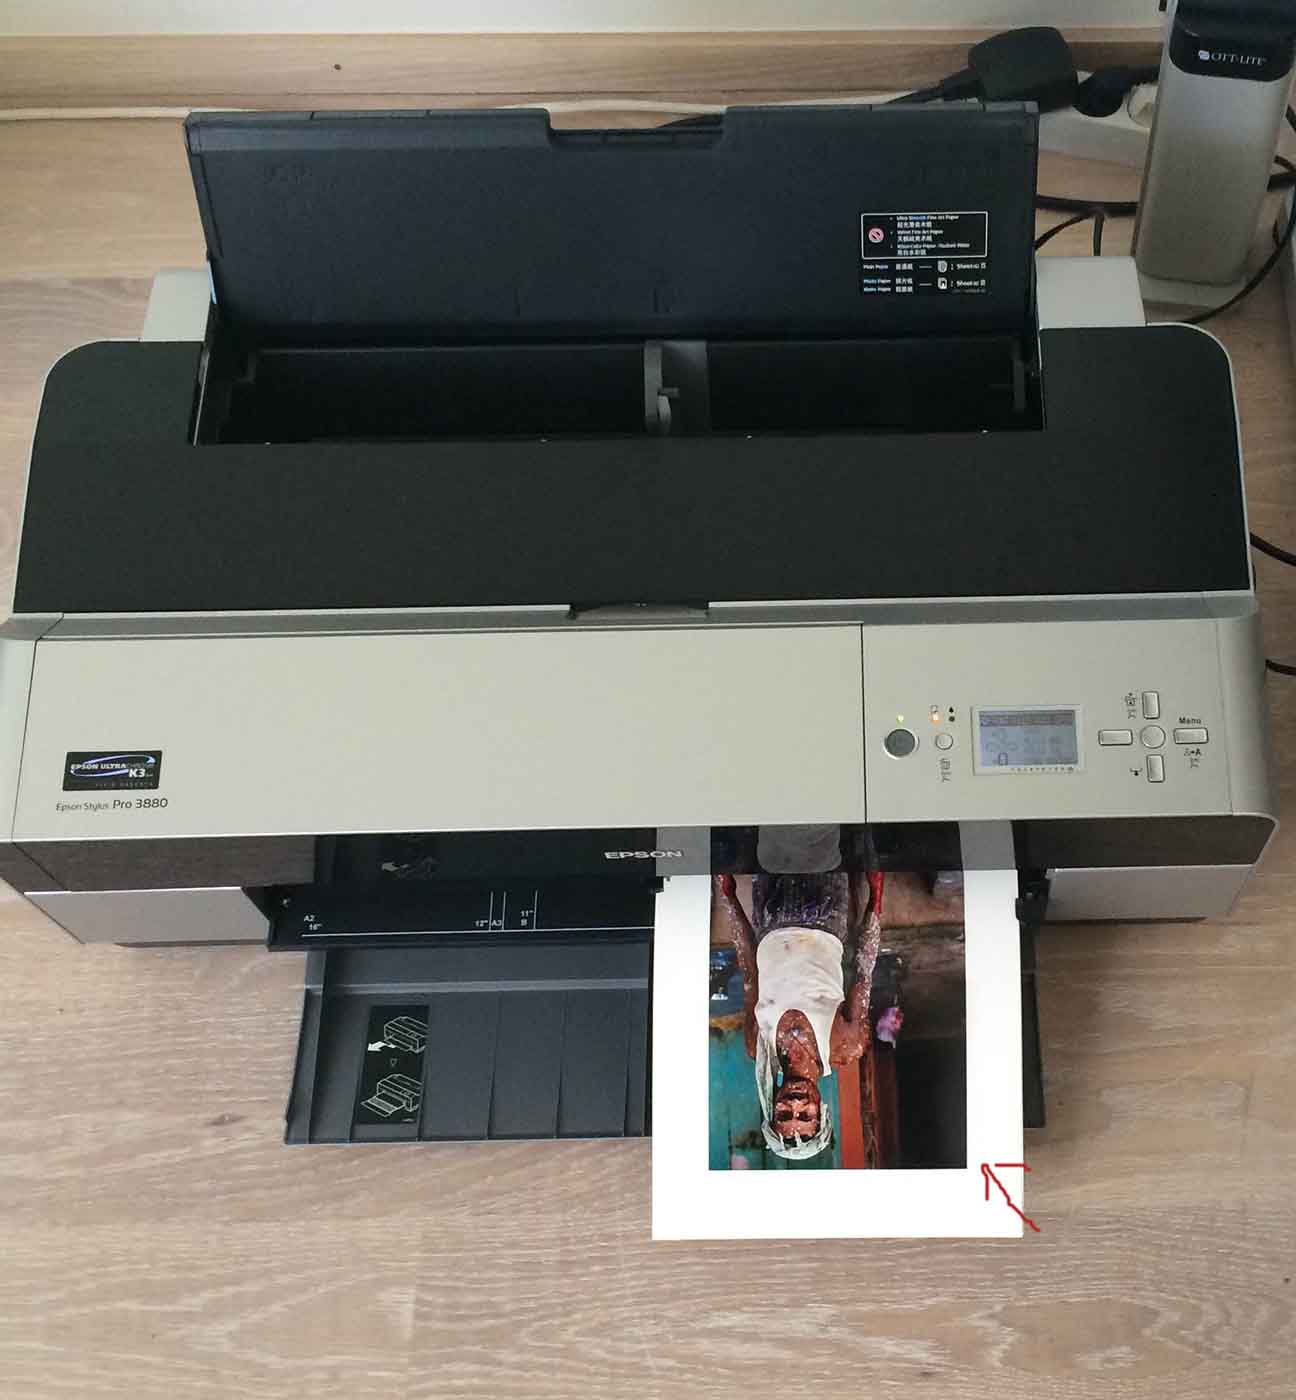 epson 3880 printer not feeding paper